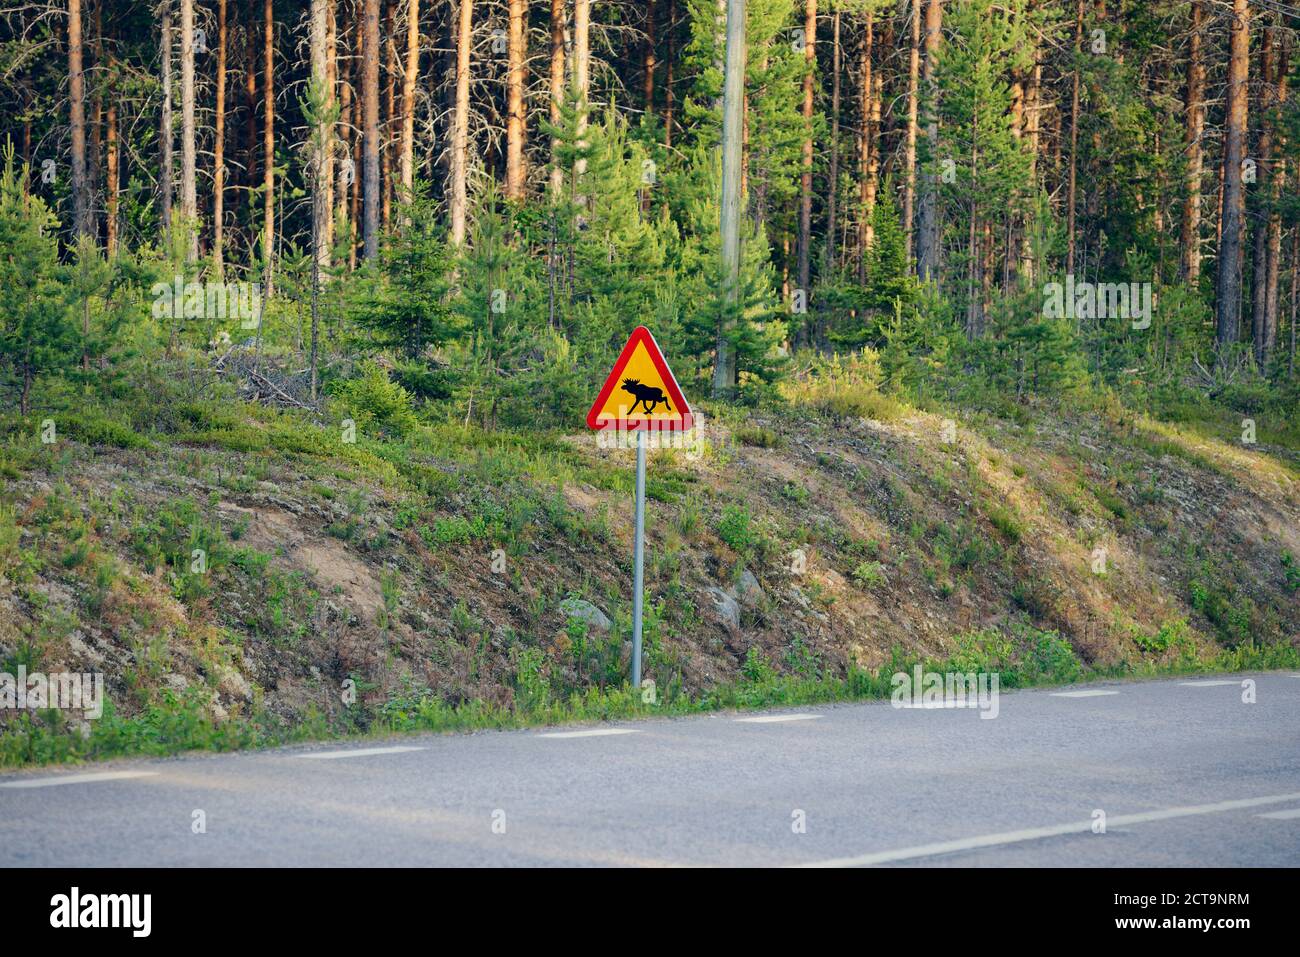 Sweden, Jokkmokk, Elk crossing road sign at country road Stock Photo